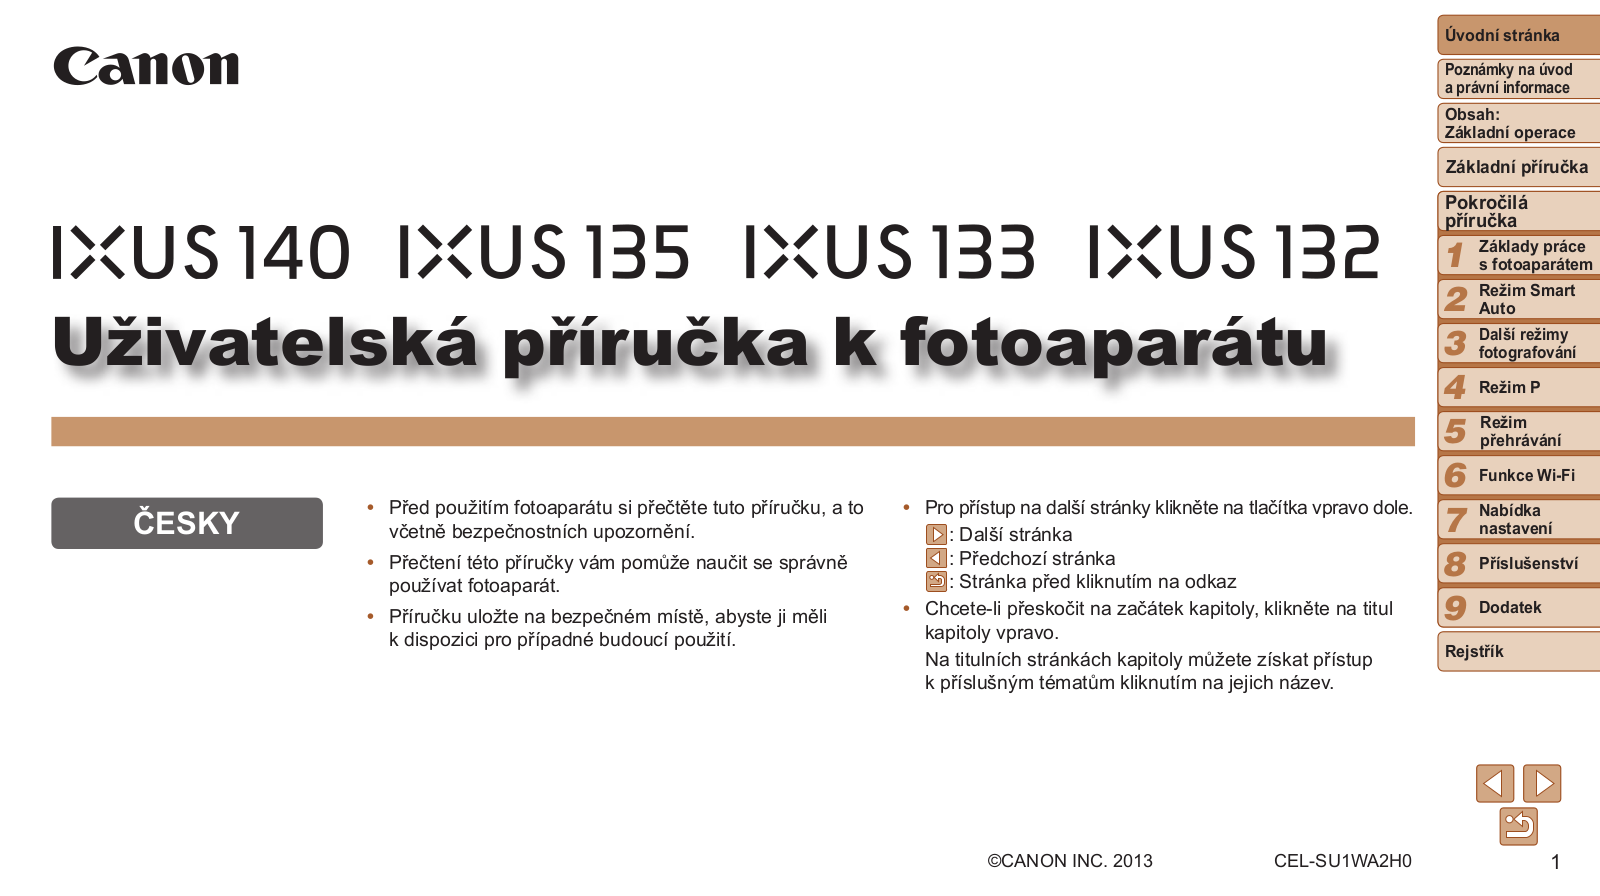 Canon IXUS 132 User Manual